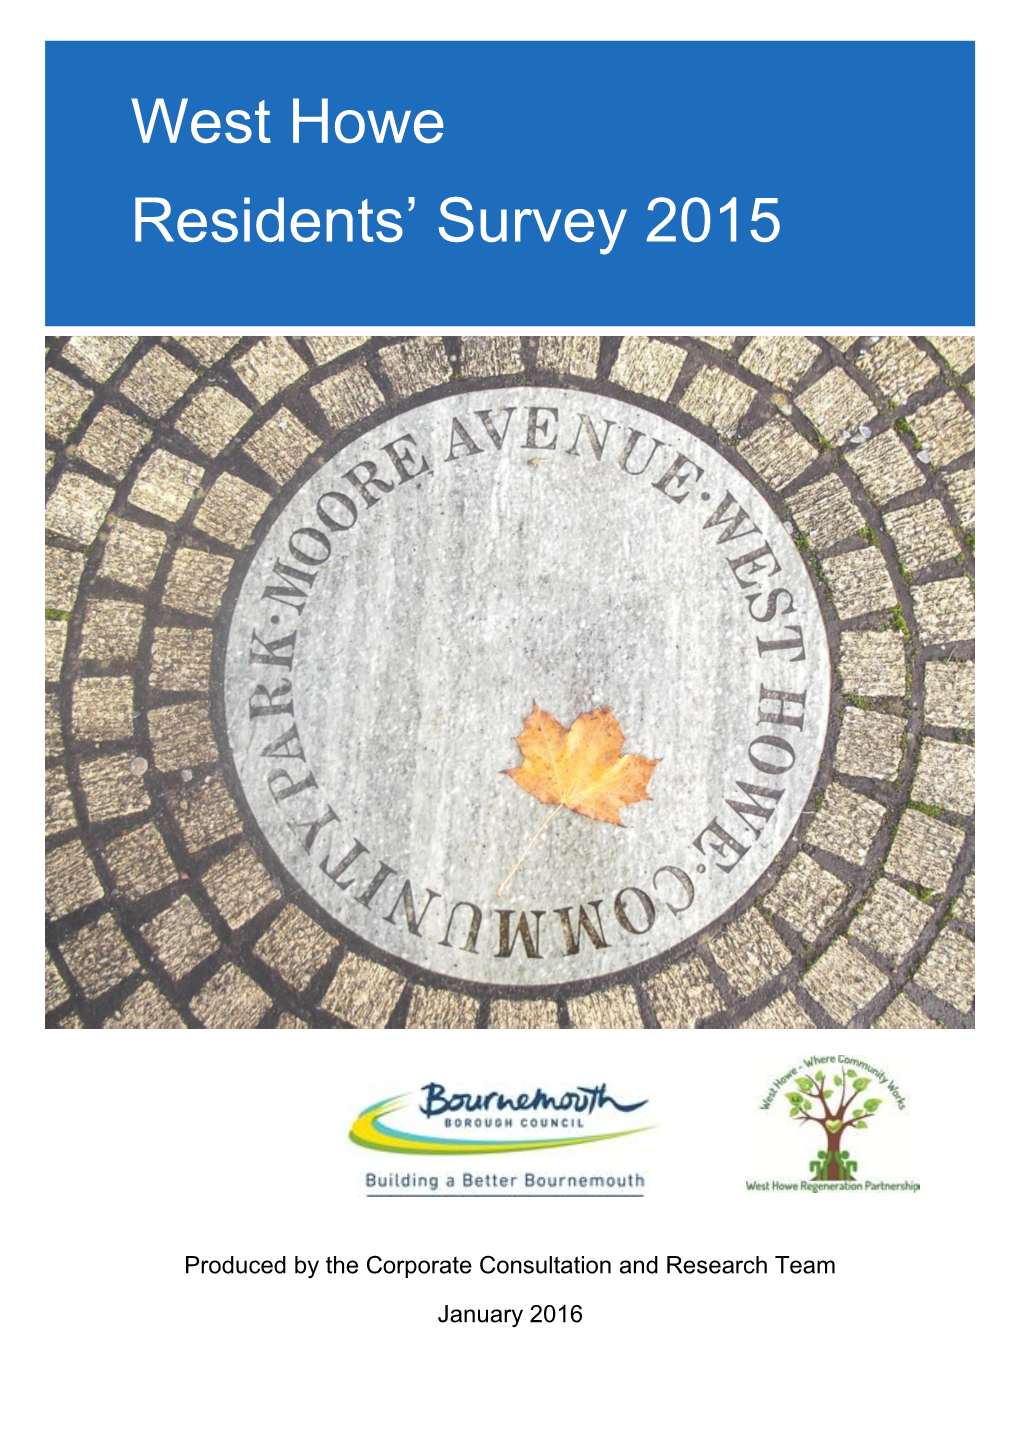 West Howe Residents' Survey 2015